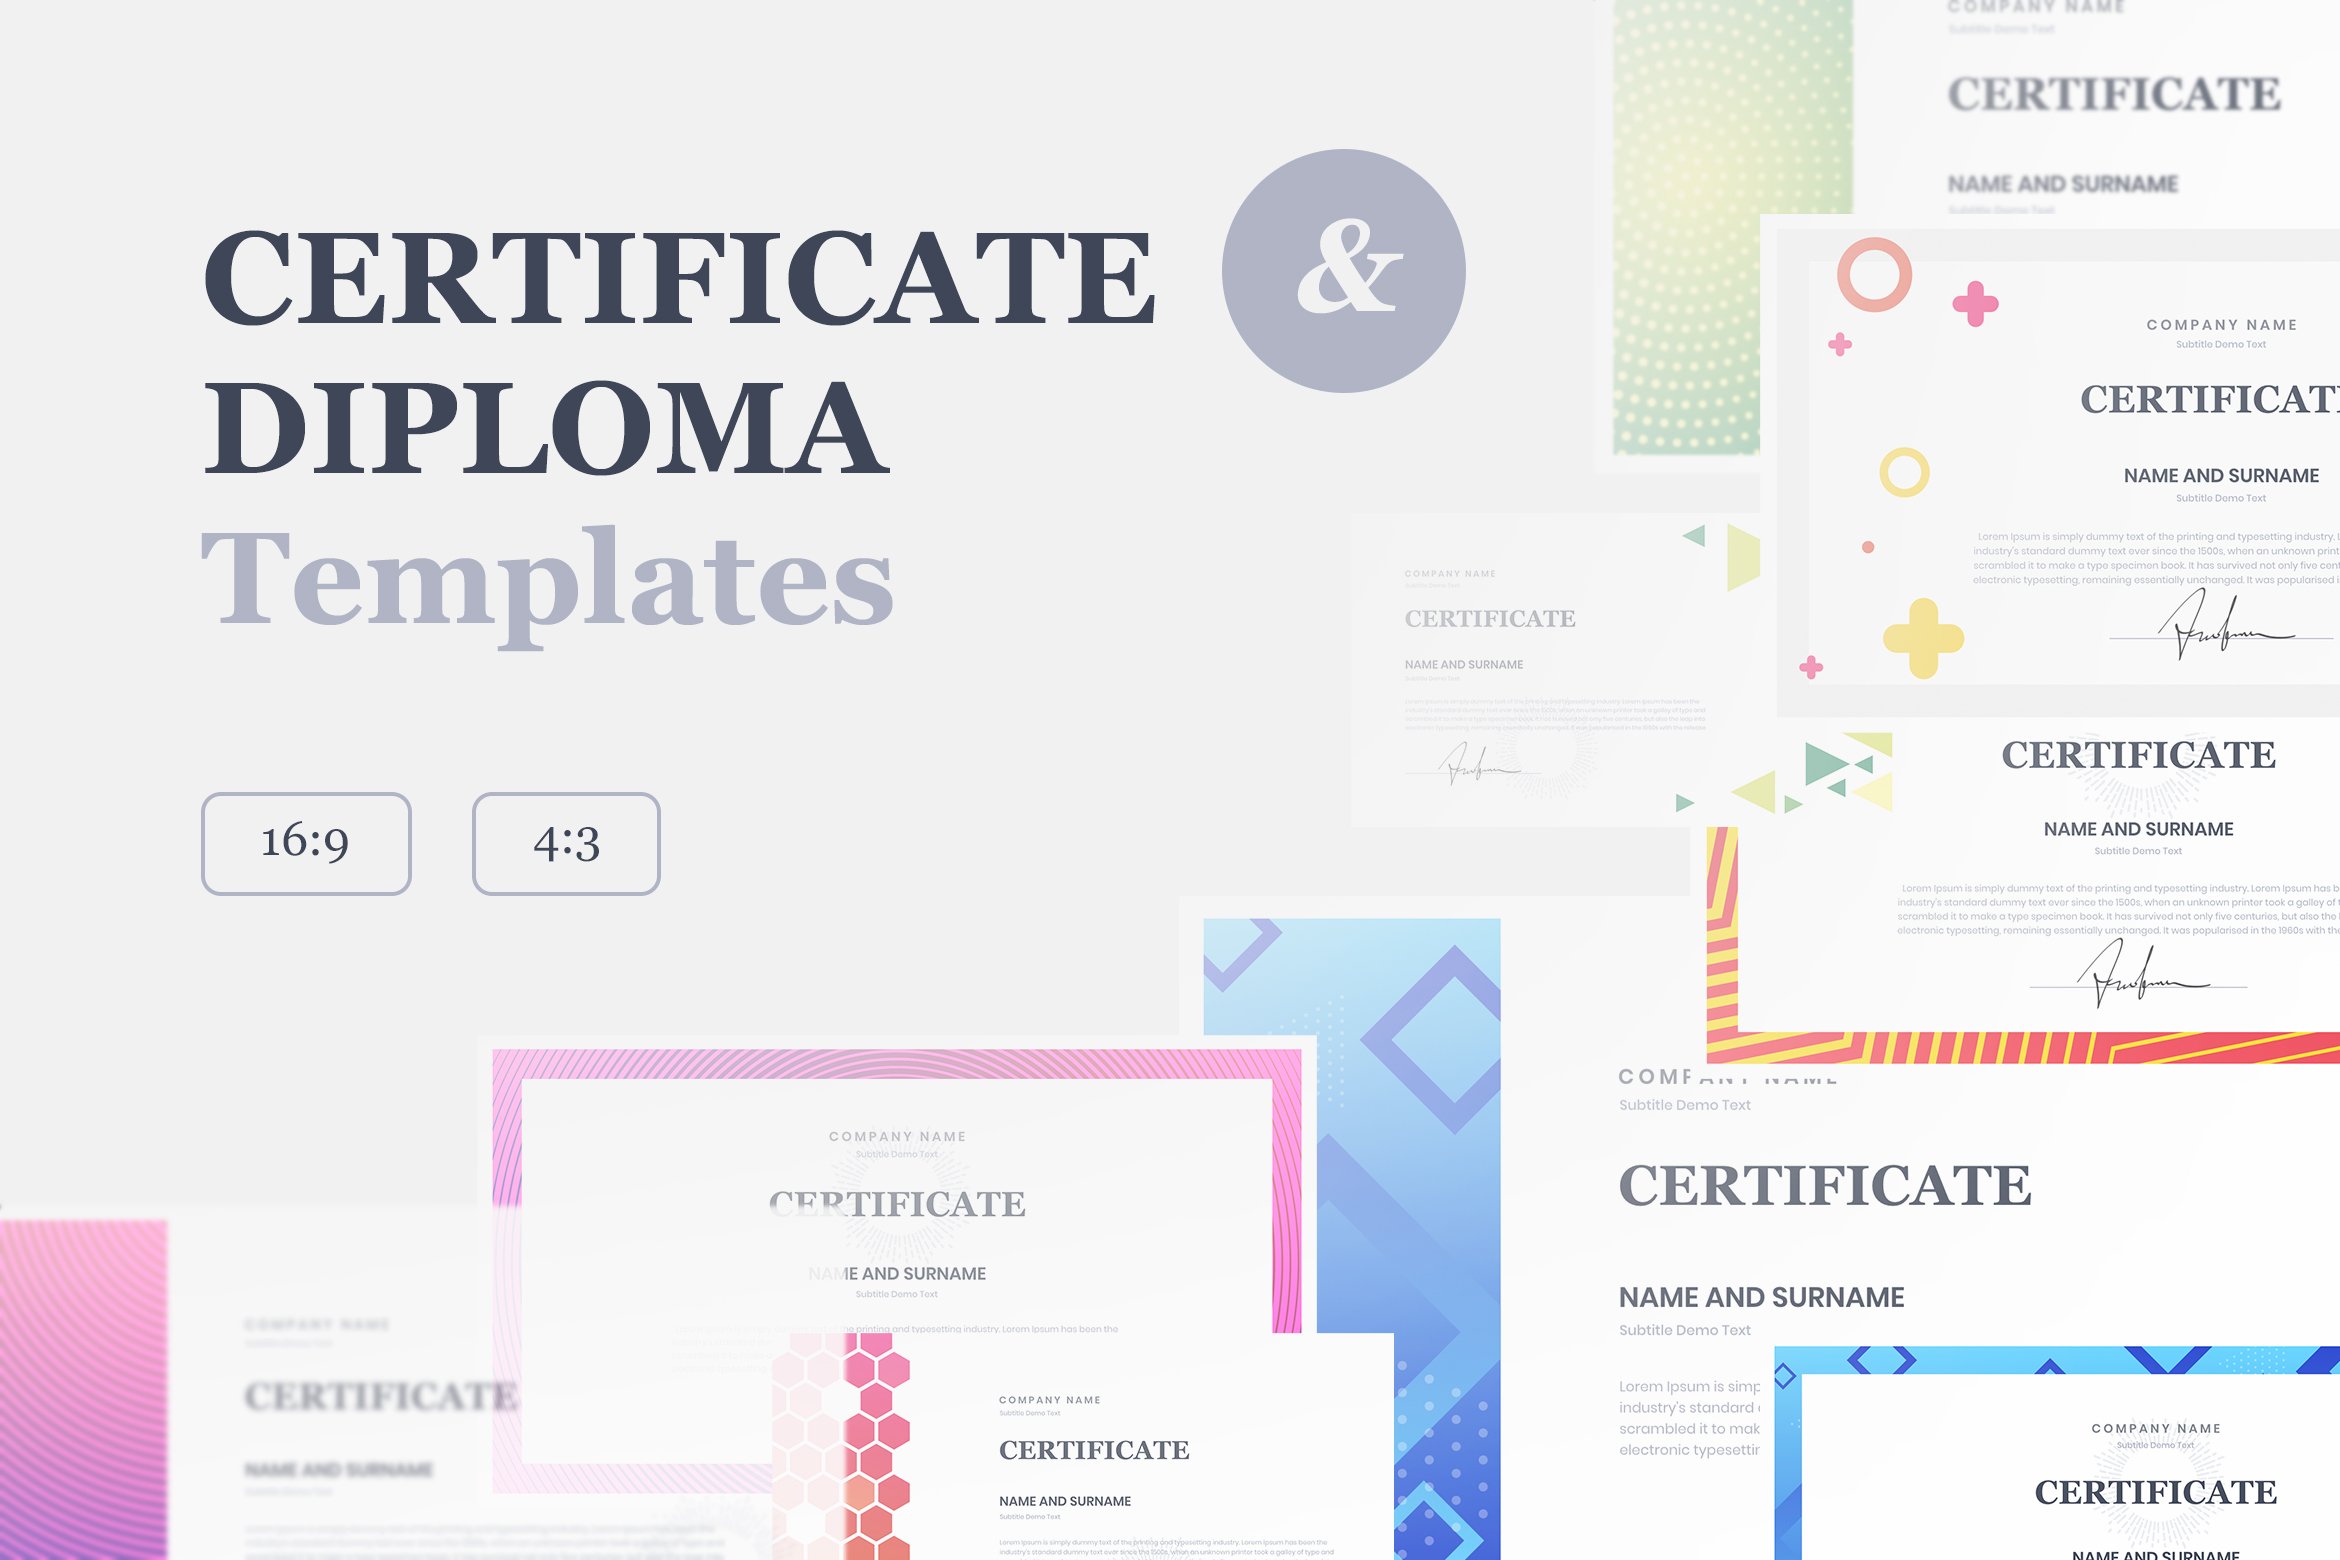 Certificate & Diploma Keynote cover image.